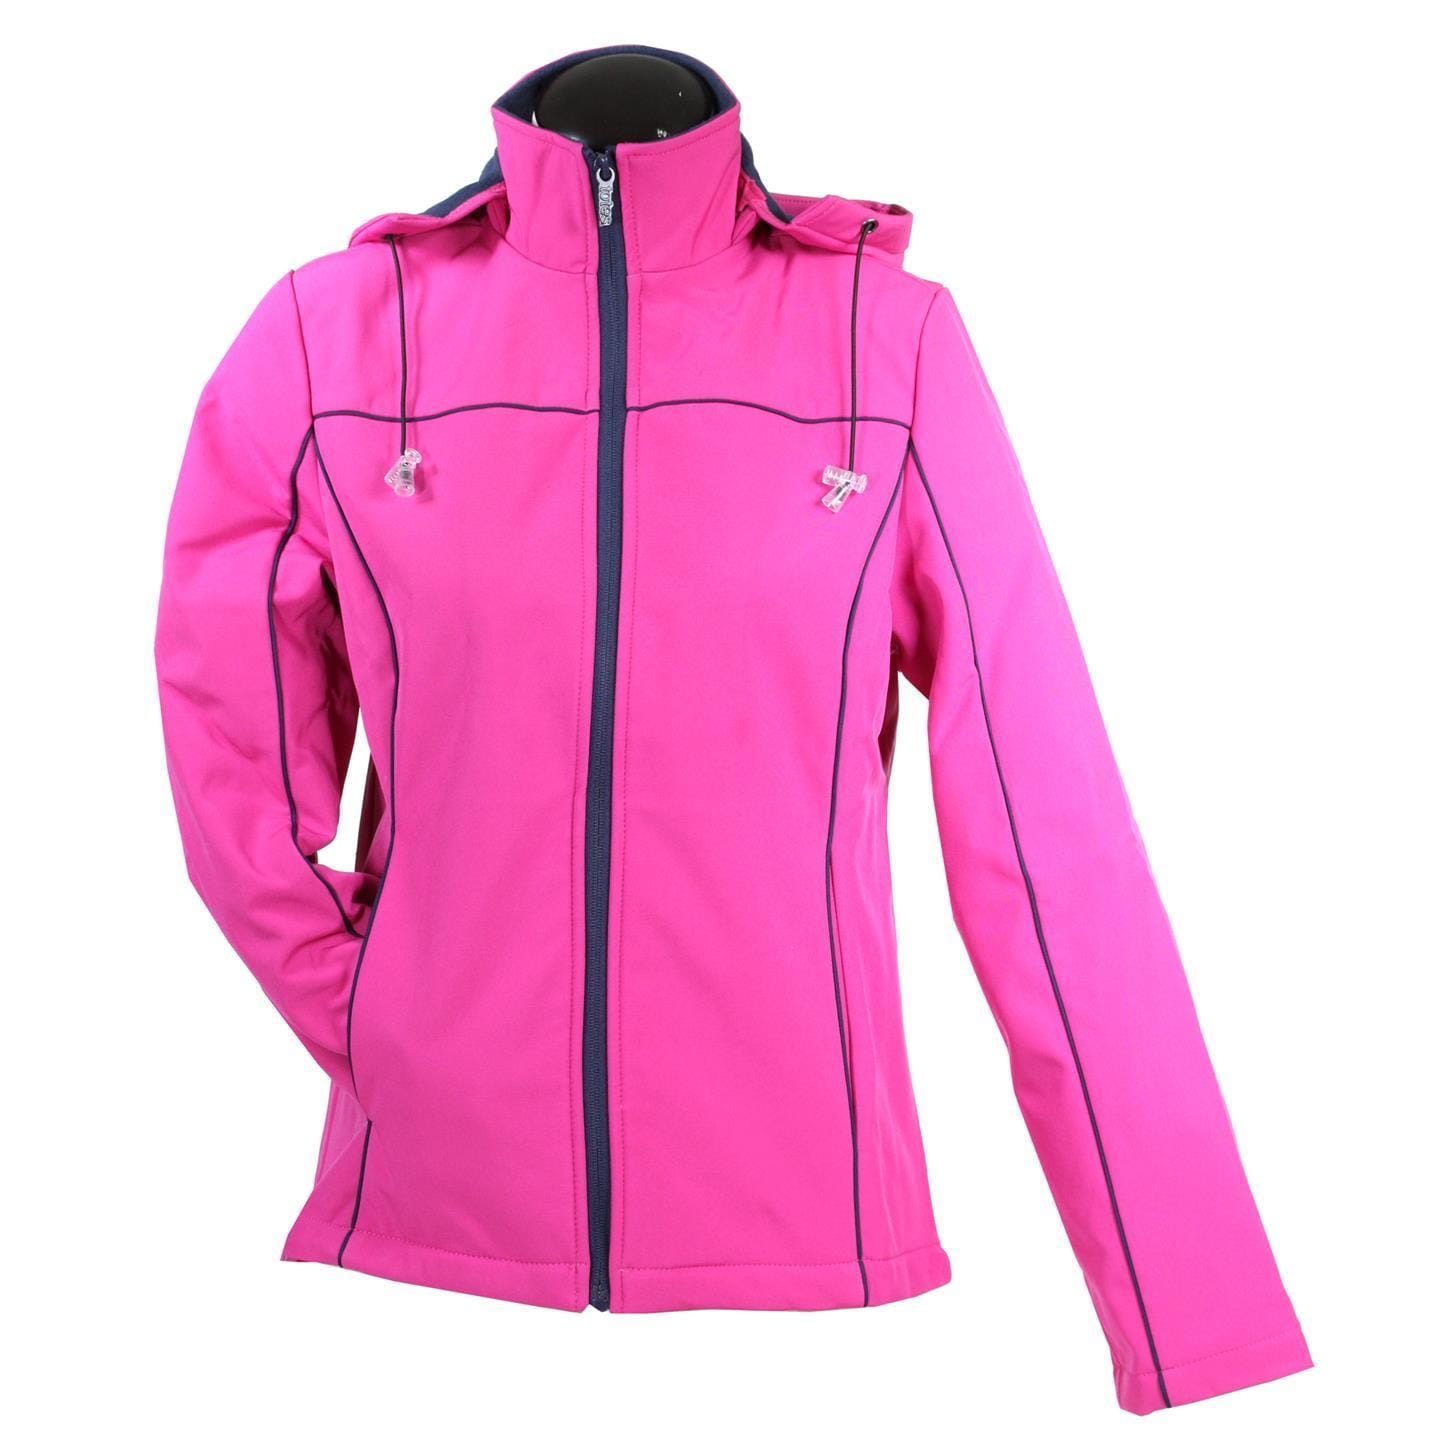 Totes Women's Bonded Fleece Soft Shell Jacket | eBay